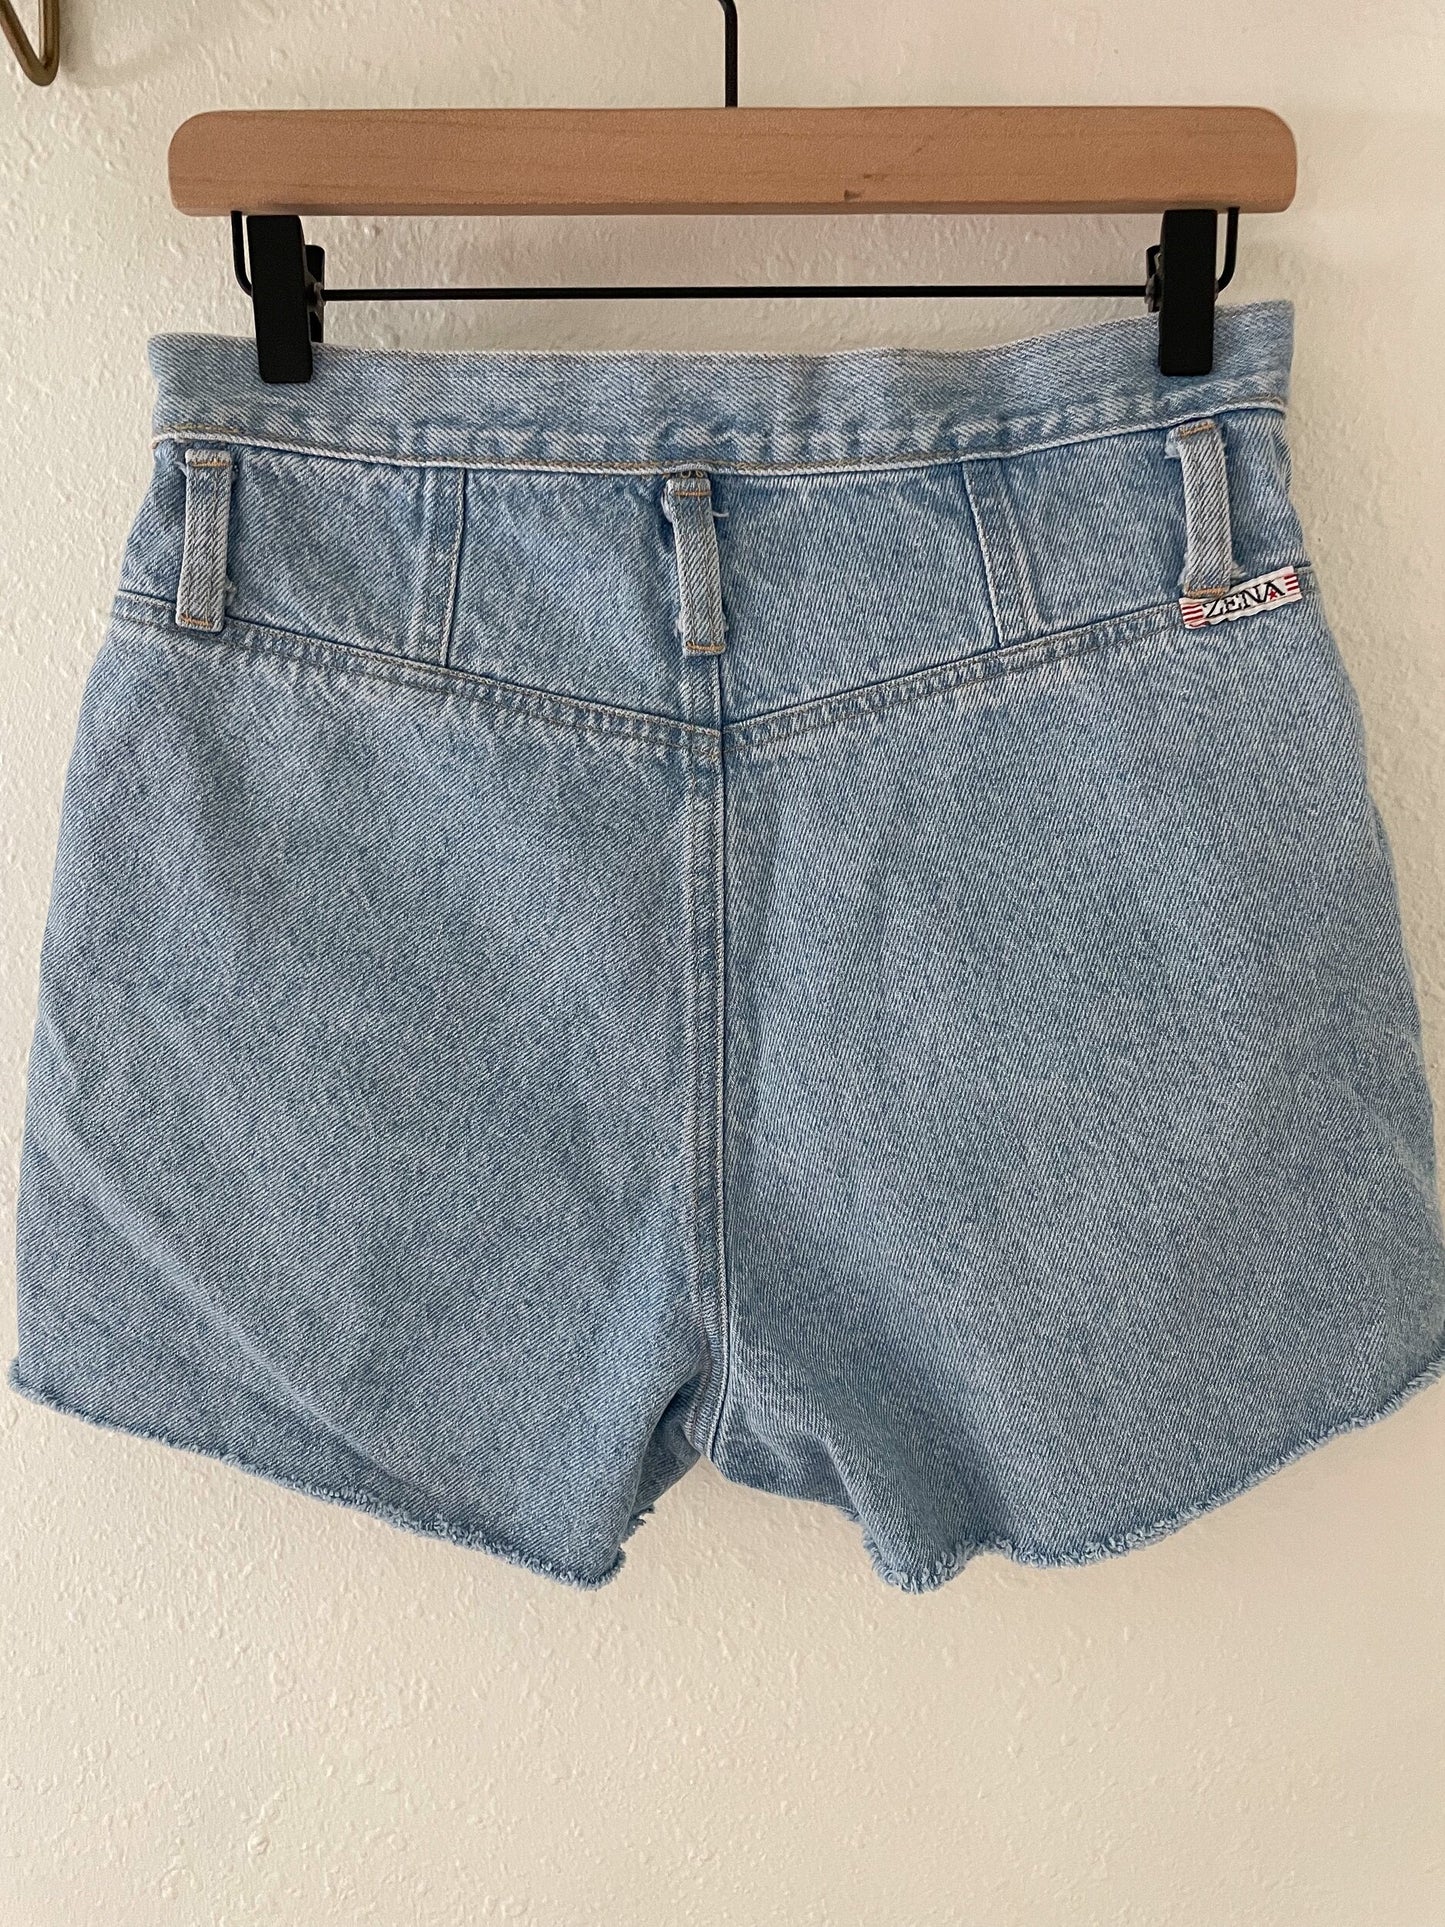 90s denim Zena shorts